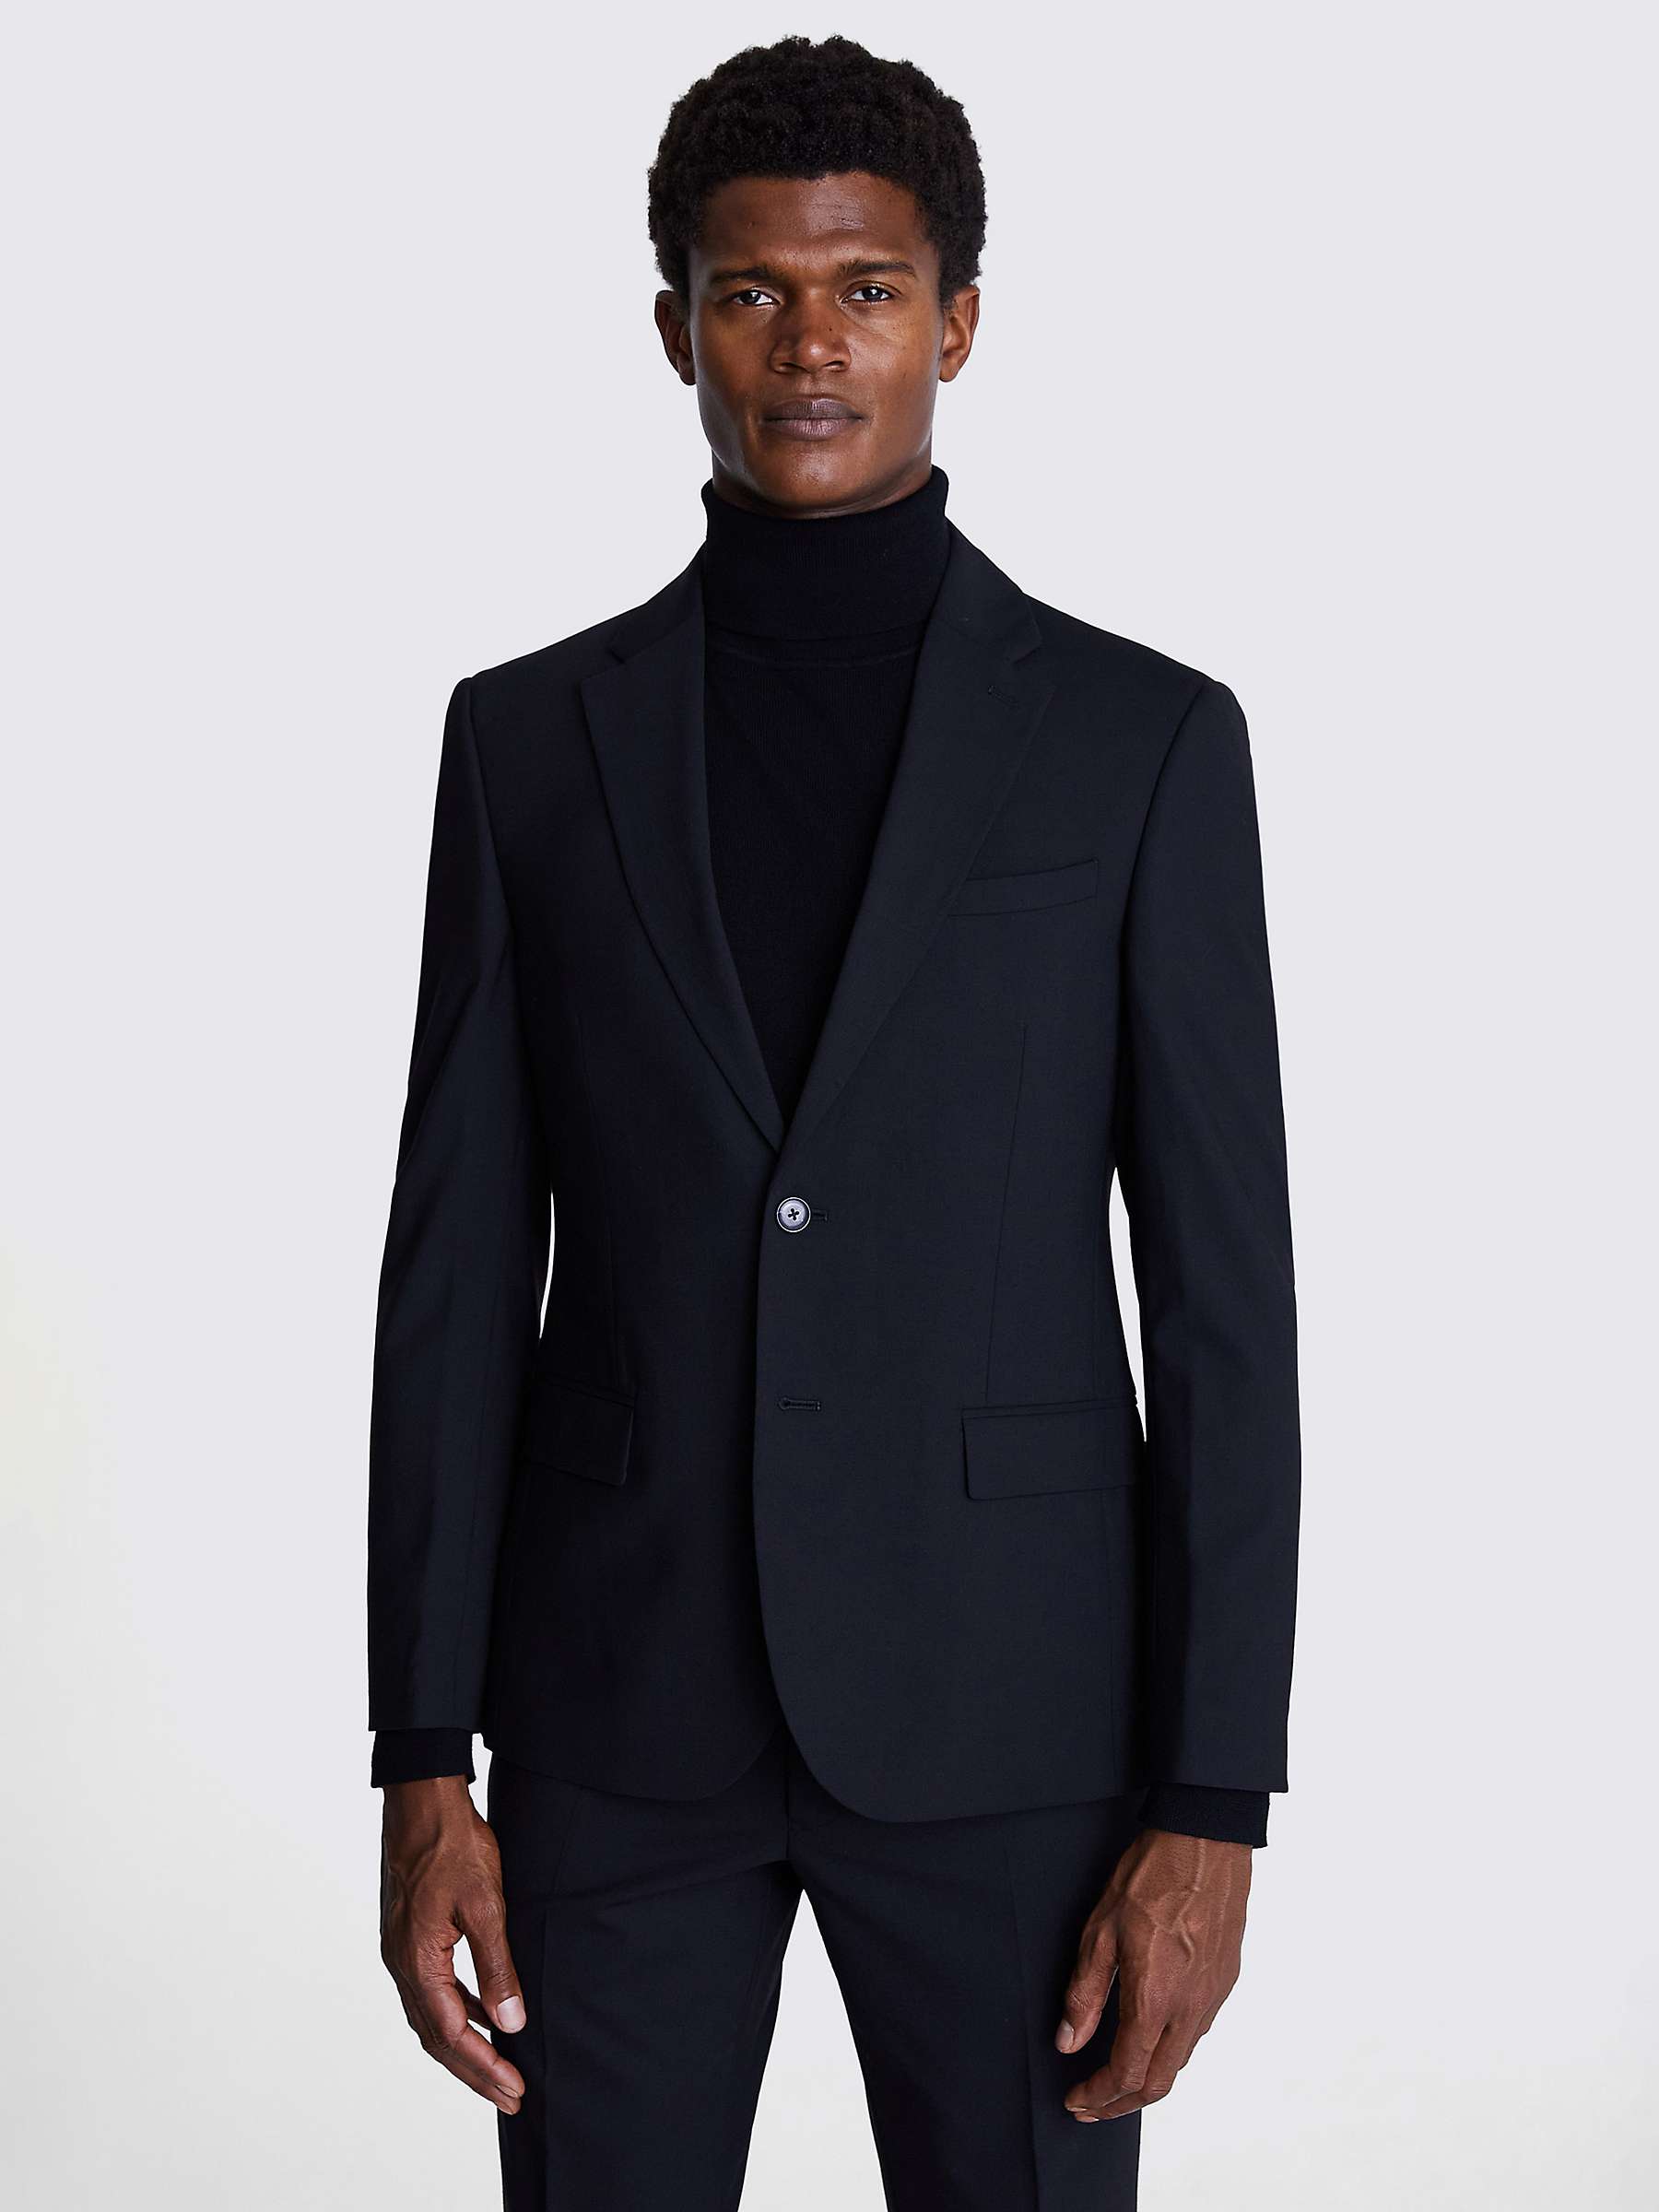 Buy Moss x DKNY Wool Blend Slim Fit Suit Jacket Online at johnlewis.com